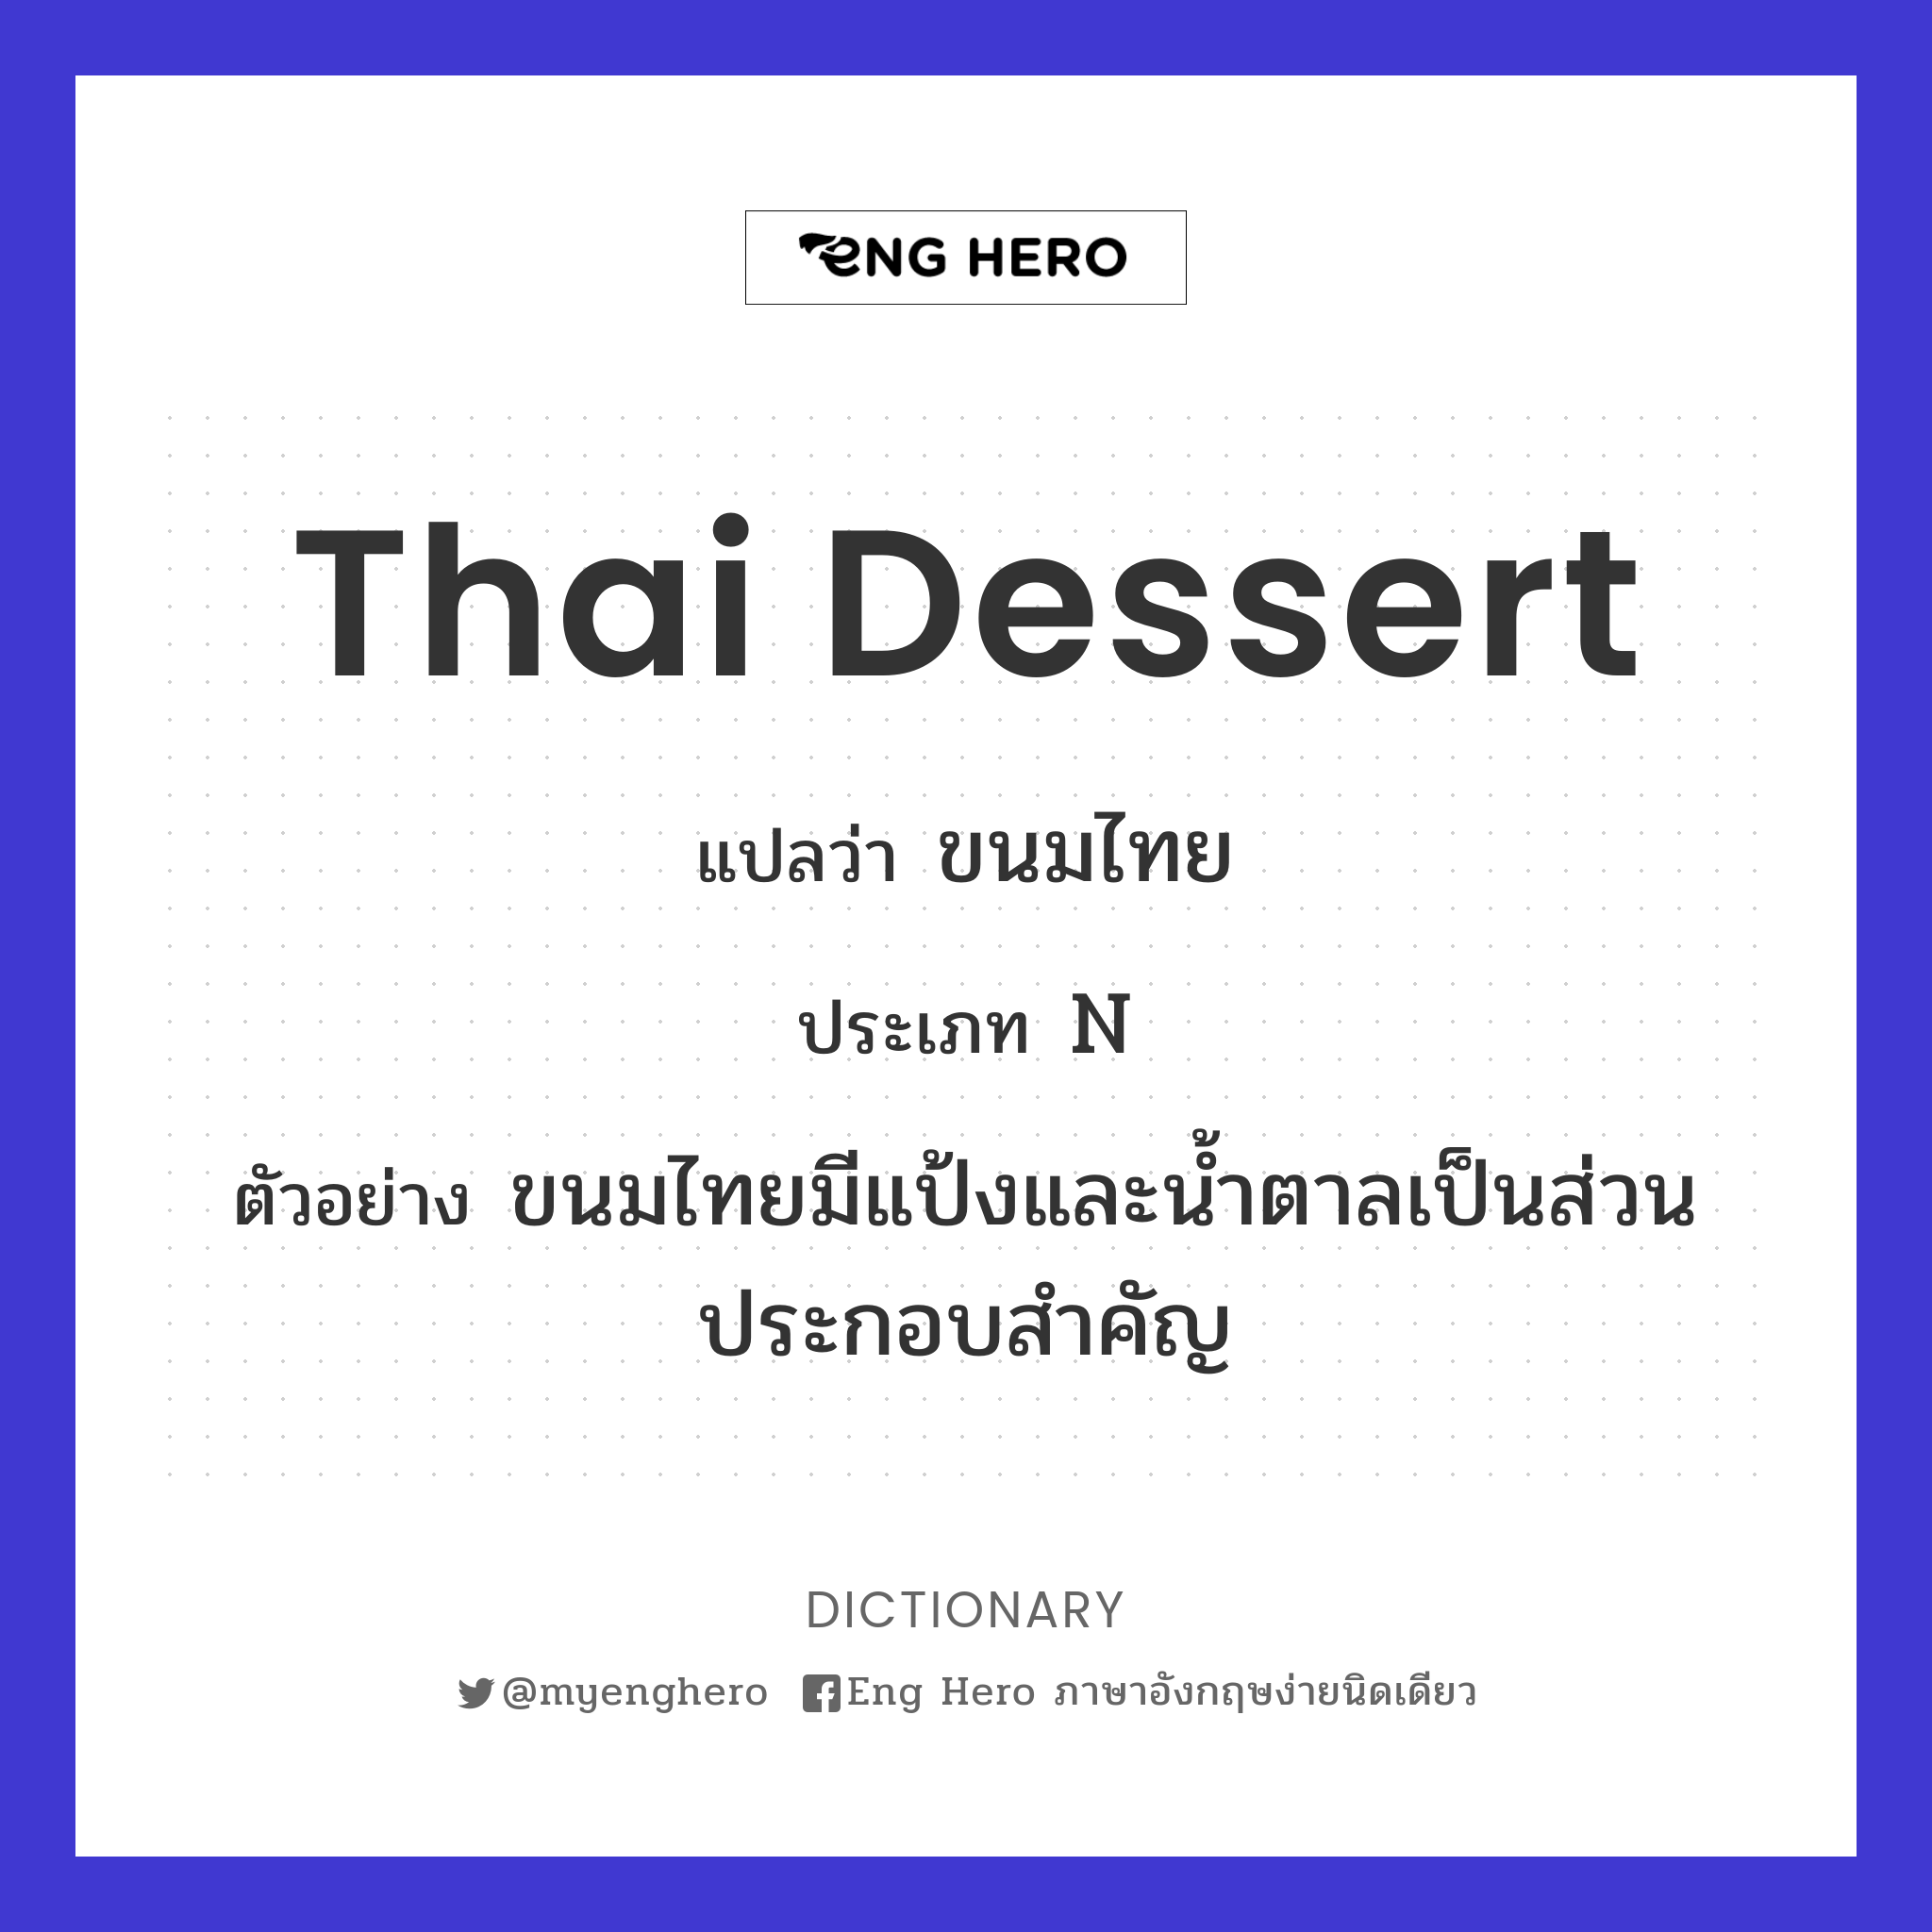 Thai dessert